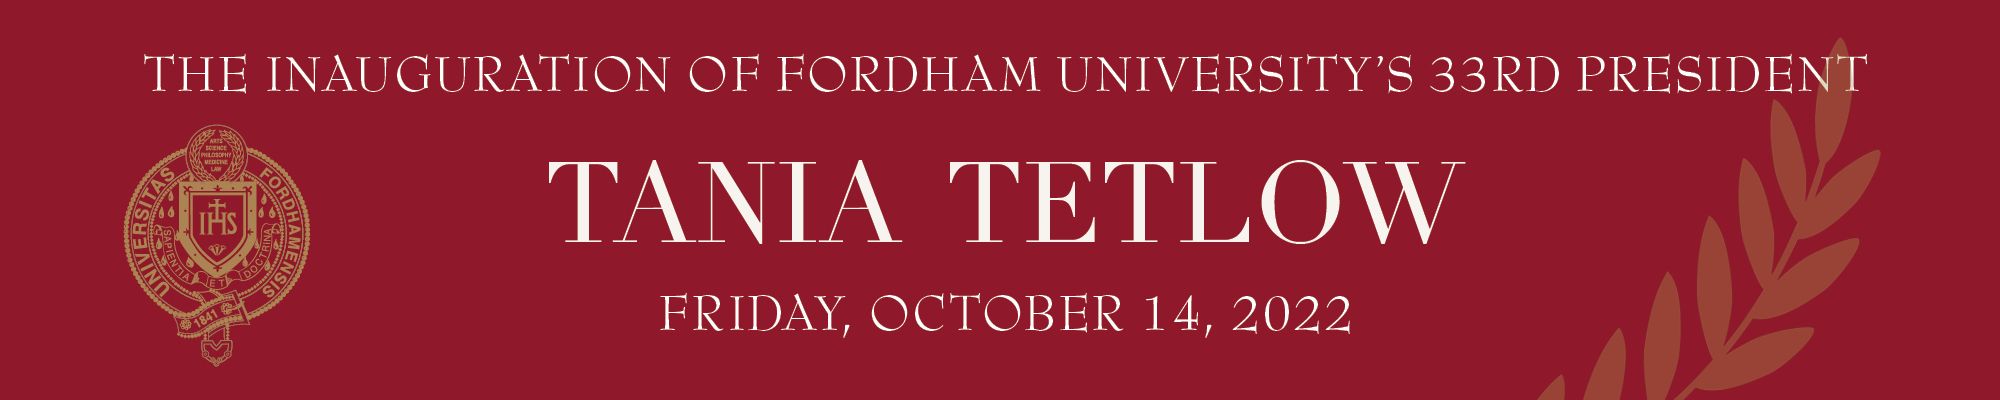 The Inauguration of Fordham University's 33rd President, Tania Tetlow, Friday, October 14, 2022